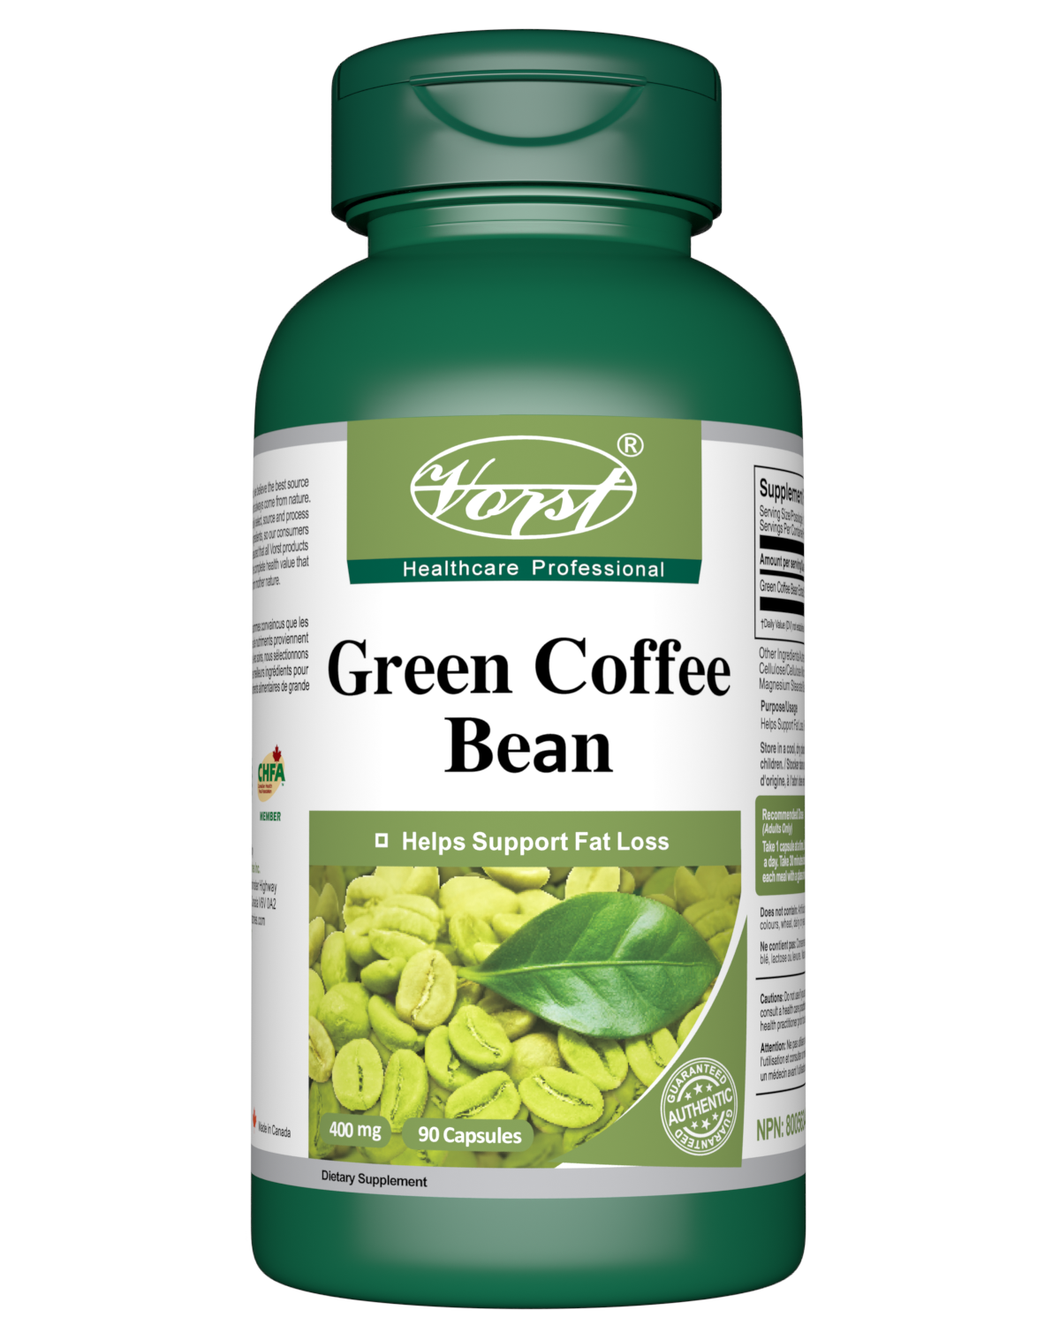 Green Coffee Bean 400mg 90 Capsules bottle